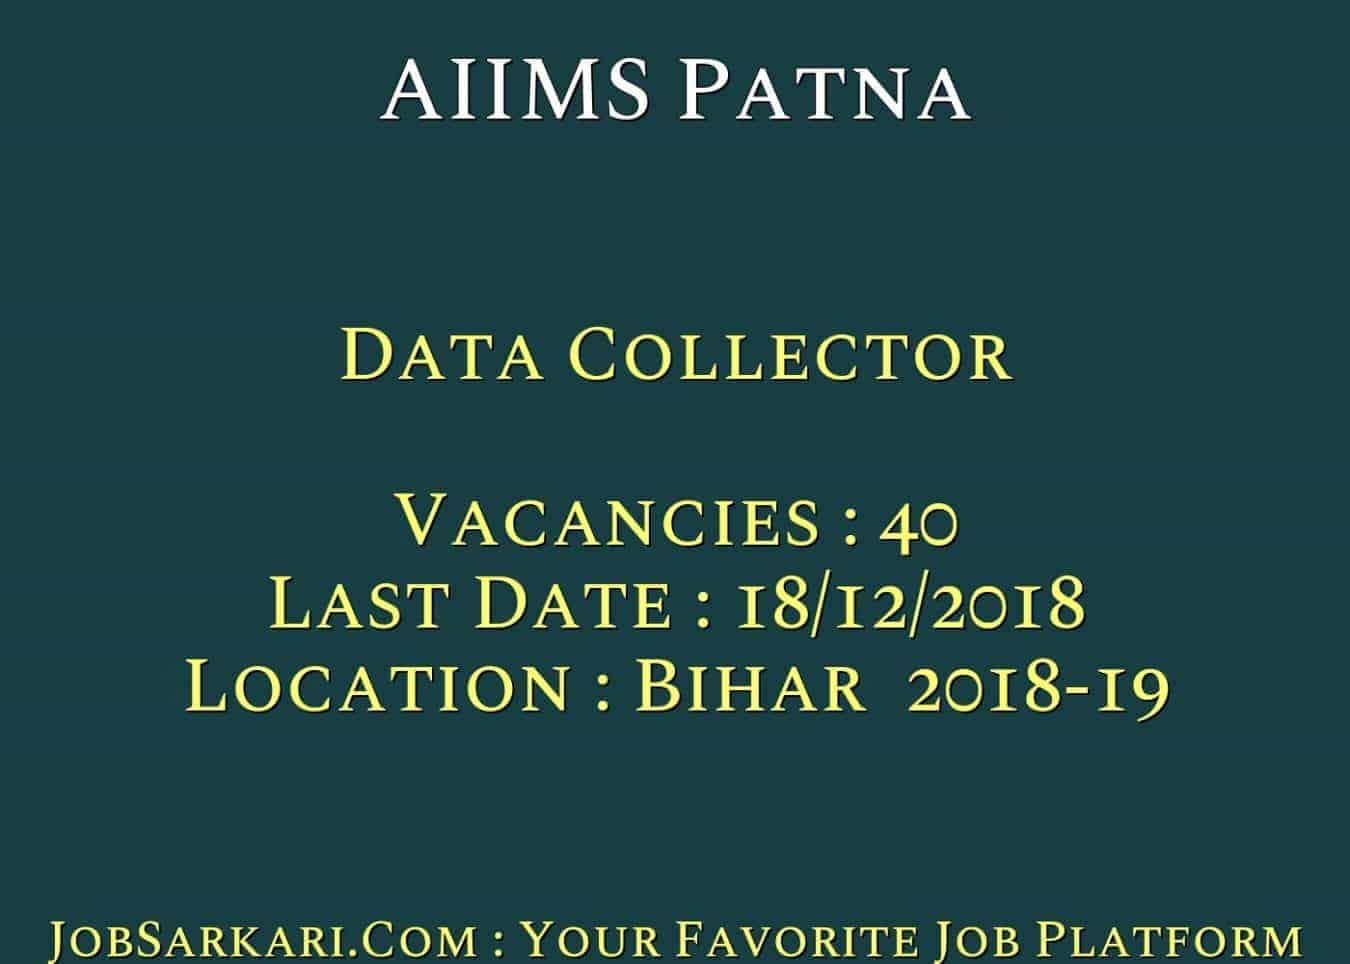 AIIMS Patna Recruitment 2018 for Data Collector Govt Job